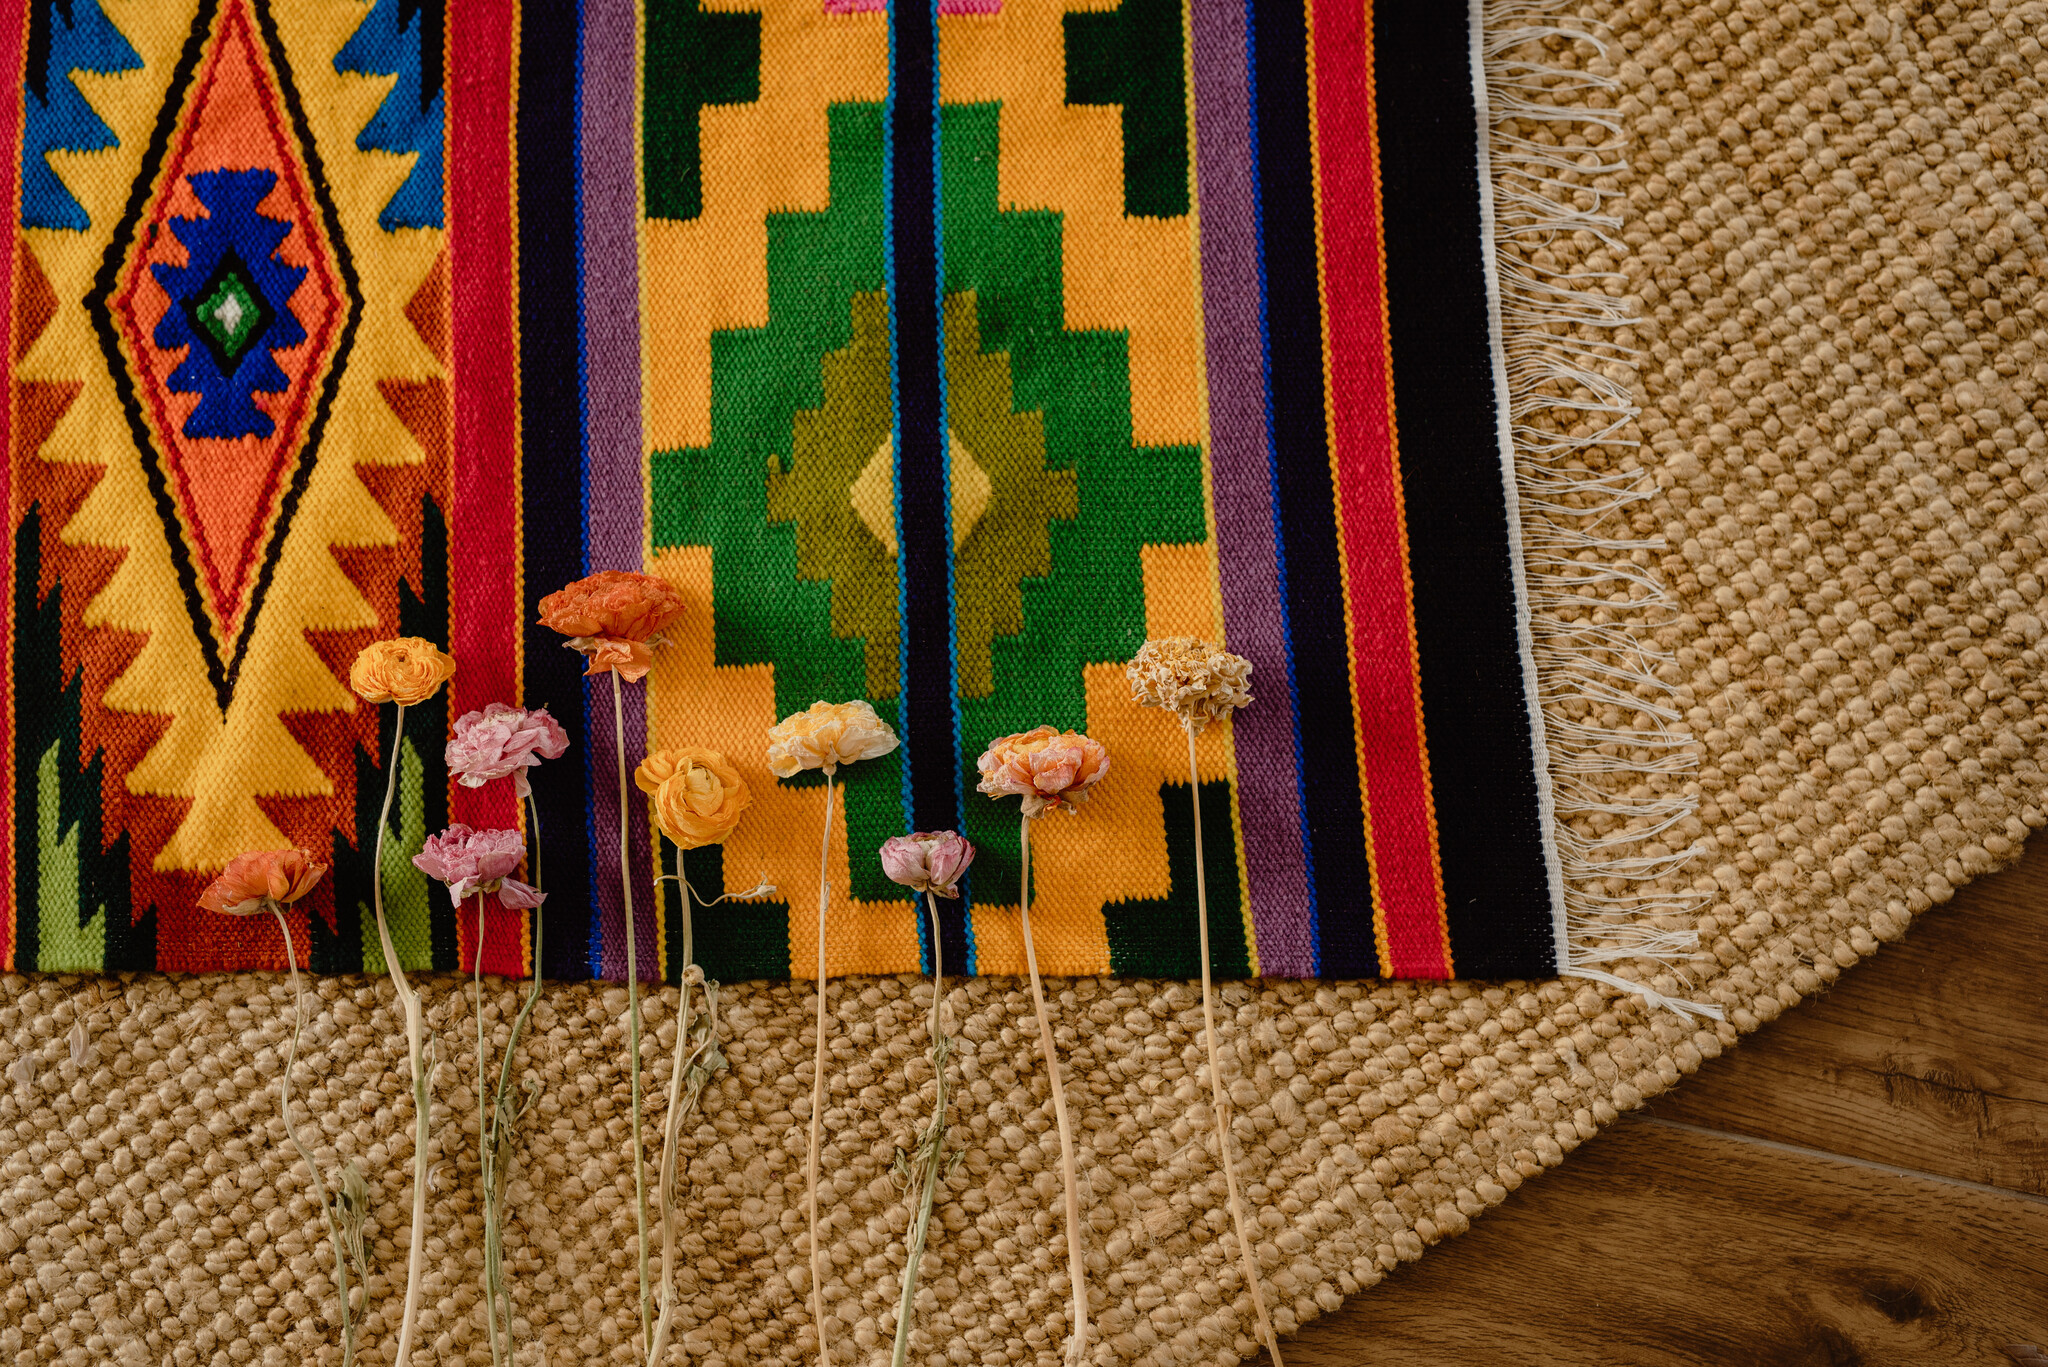 Wool Carpet Aztec 170 cm x 115 cm - Southwestern - Ethnic Design